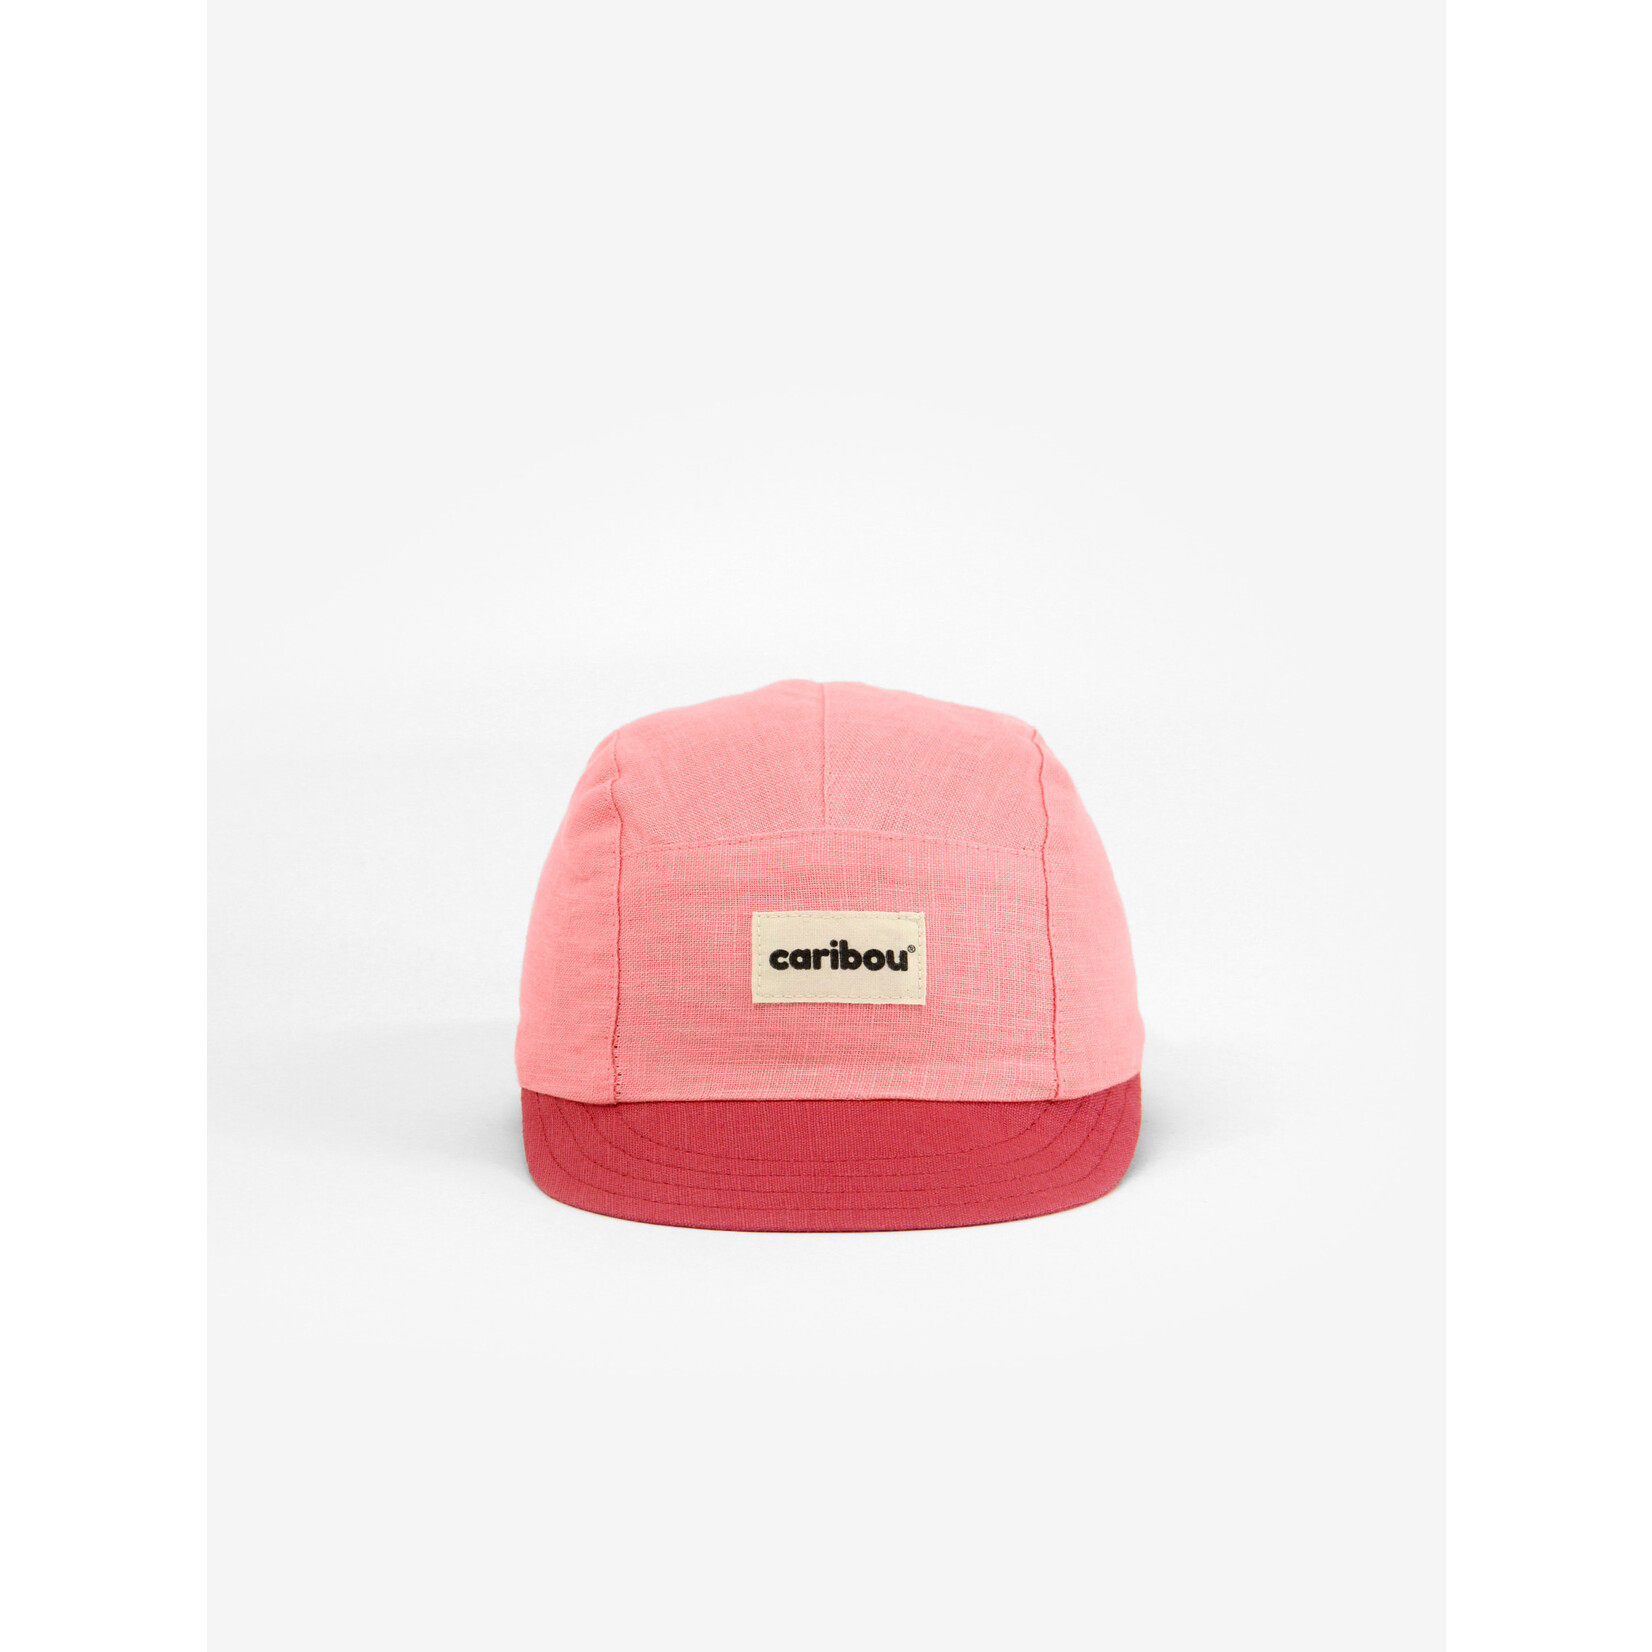 Caribou CARIBOU - Soft Linen Cap - Duo Pink